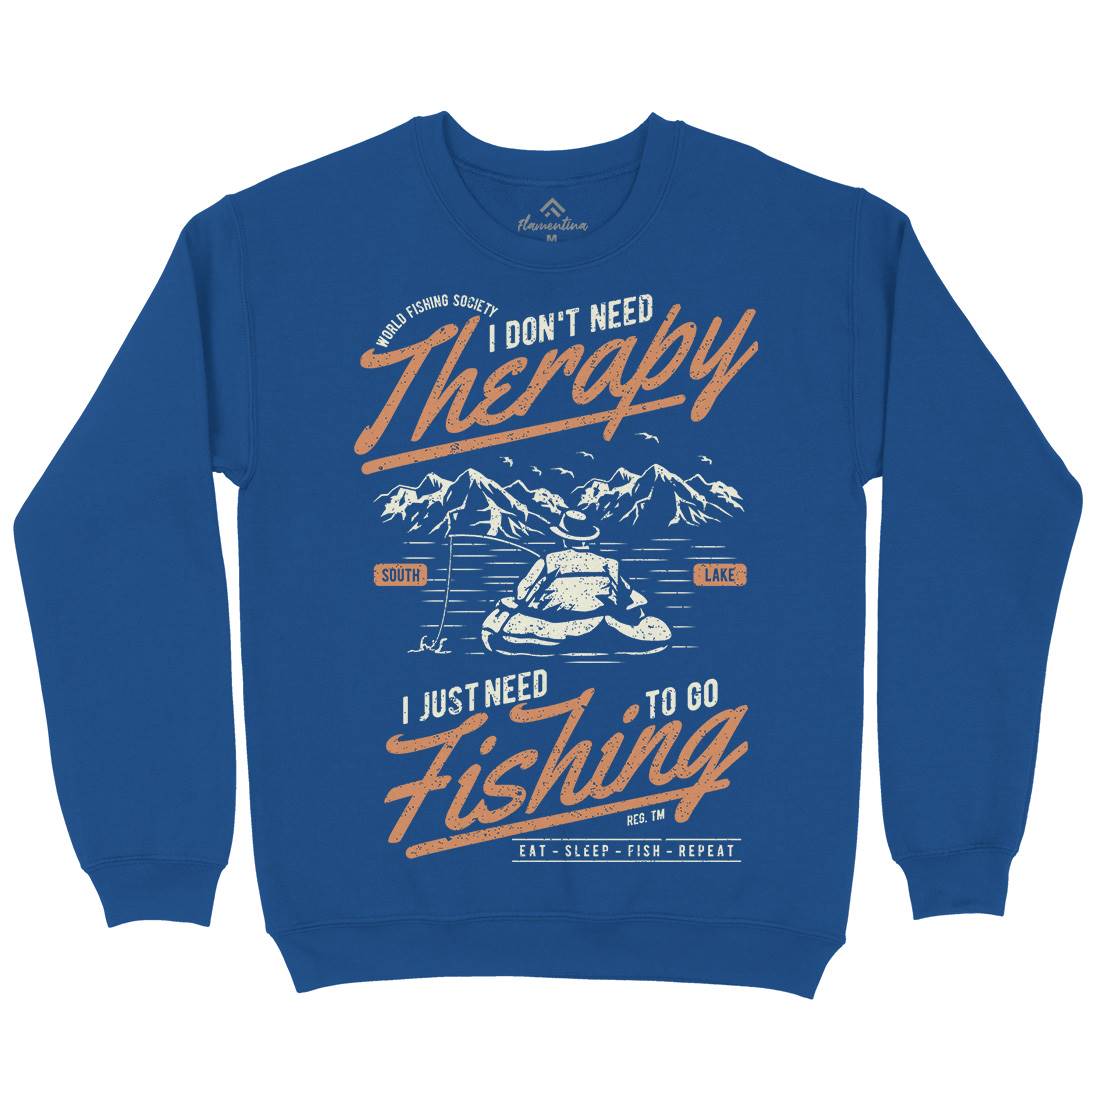 Therapy Kids Crew Neck Sweatshirt Fishing A662